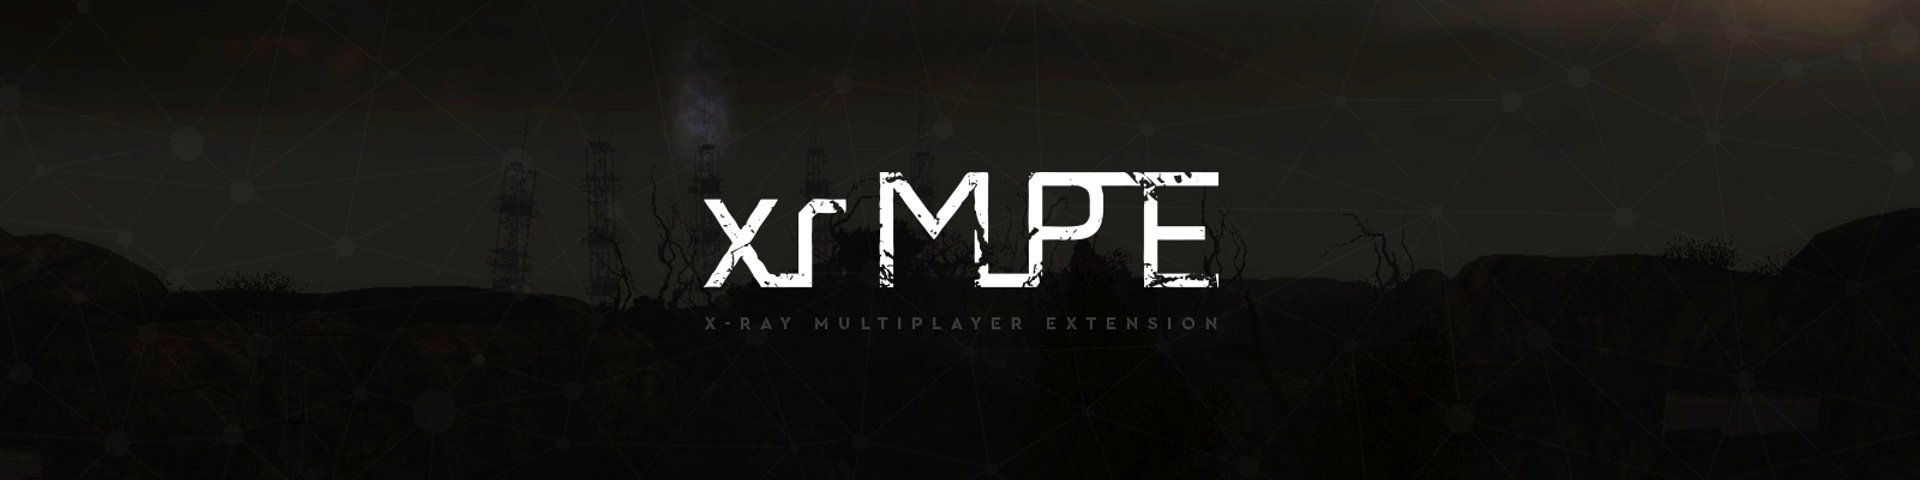 В «X-Ray Multiplayer Extension» появилась система жестов!